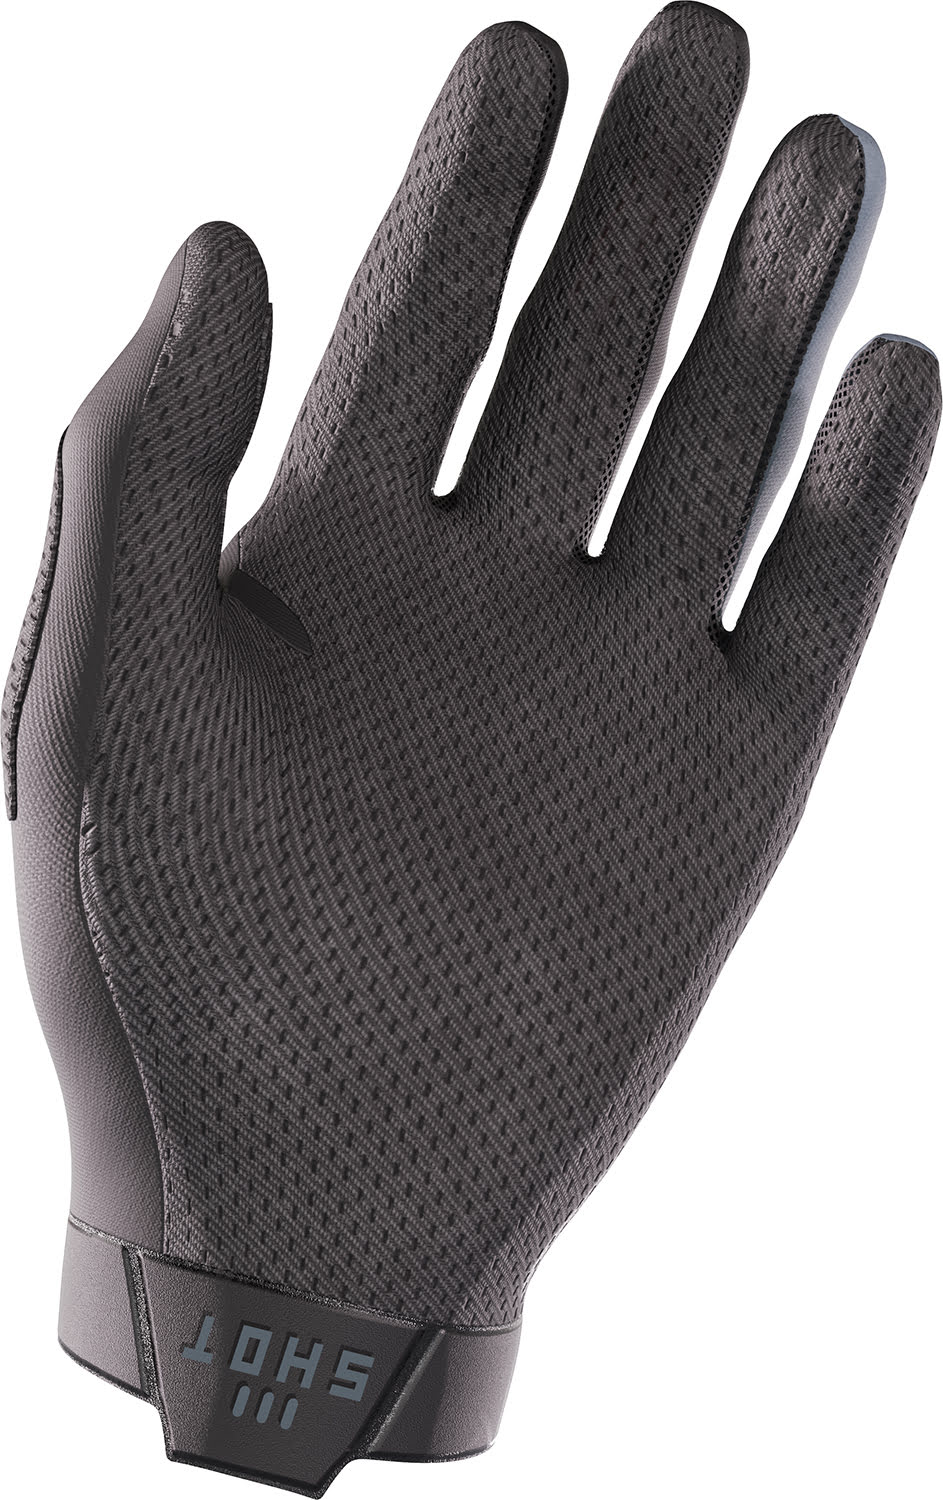 Gloves LITE Black SHOT 